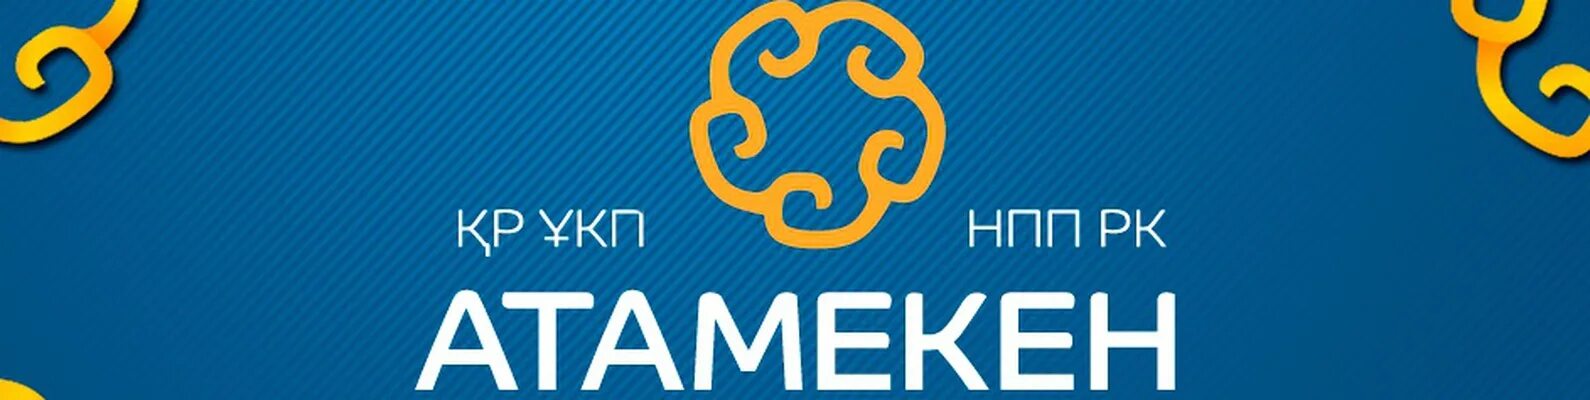 Атамекен палата предпринимателей. Атамекен эмблема. Национальная палата предпринимателей «Атамекен» logo. НПП Атамекен логотип.